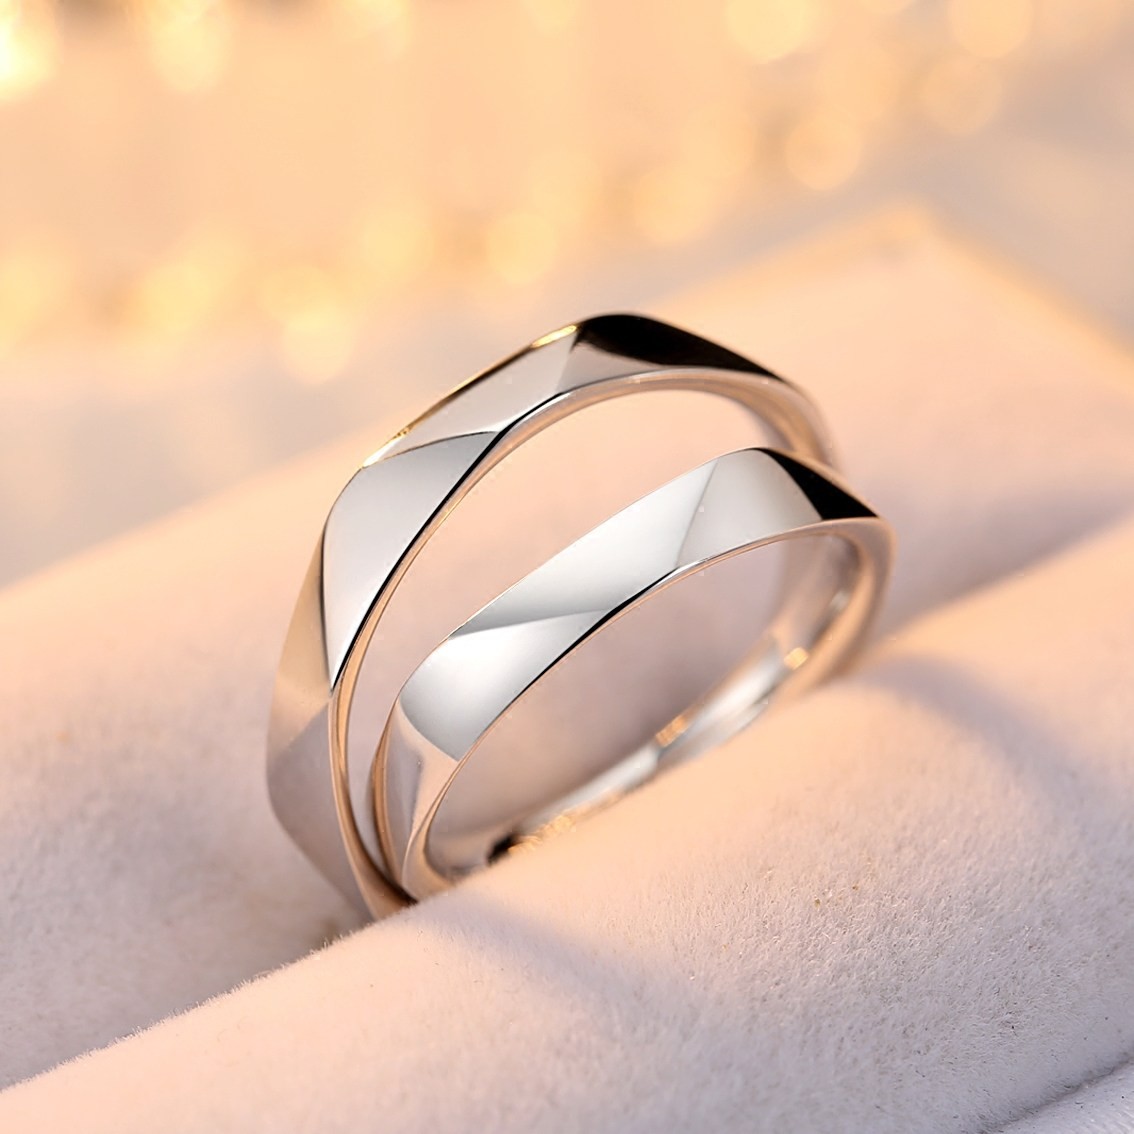 Wave Design Couples Diamond Wedding Ring Set - HH-127 - 14K Gold